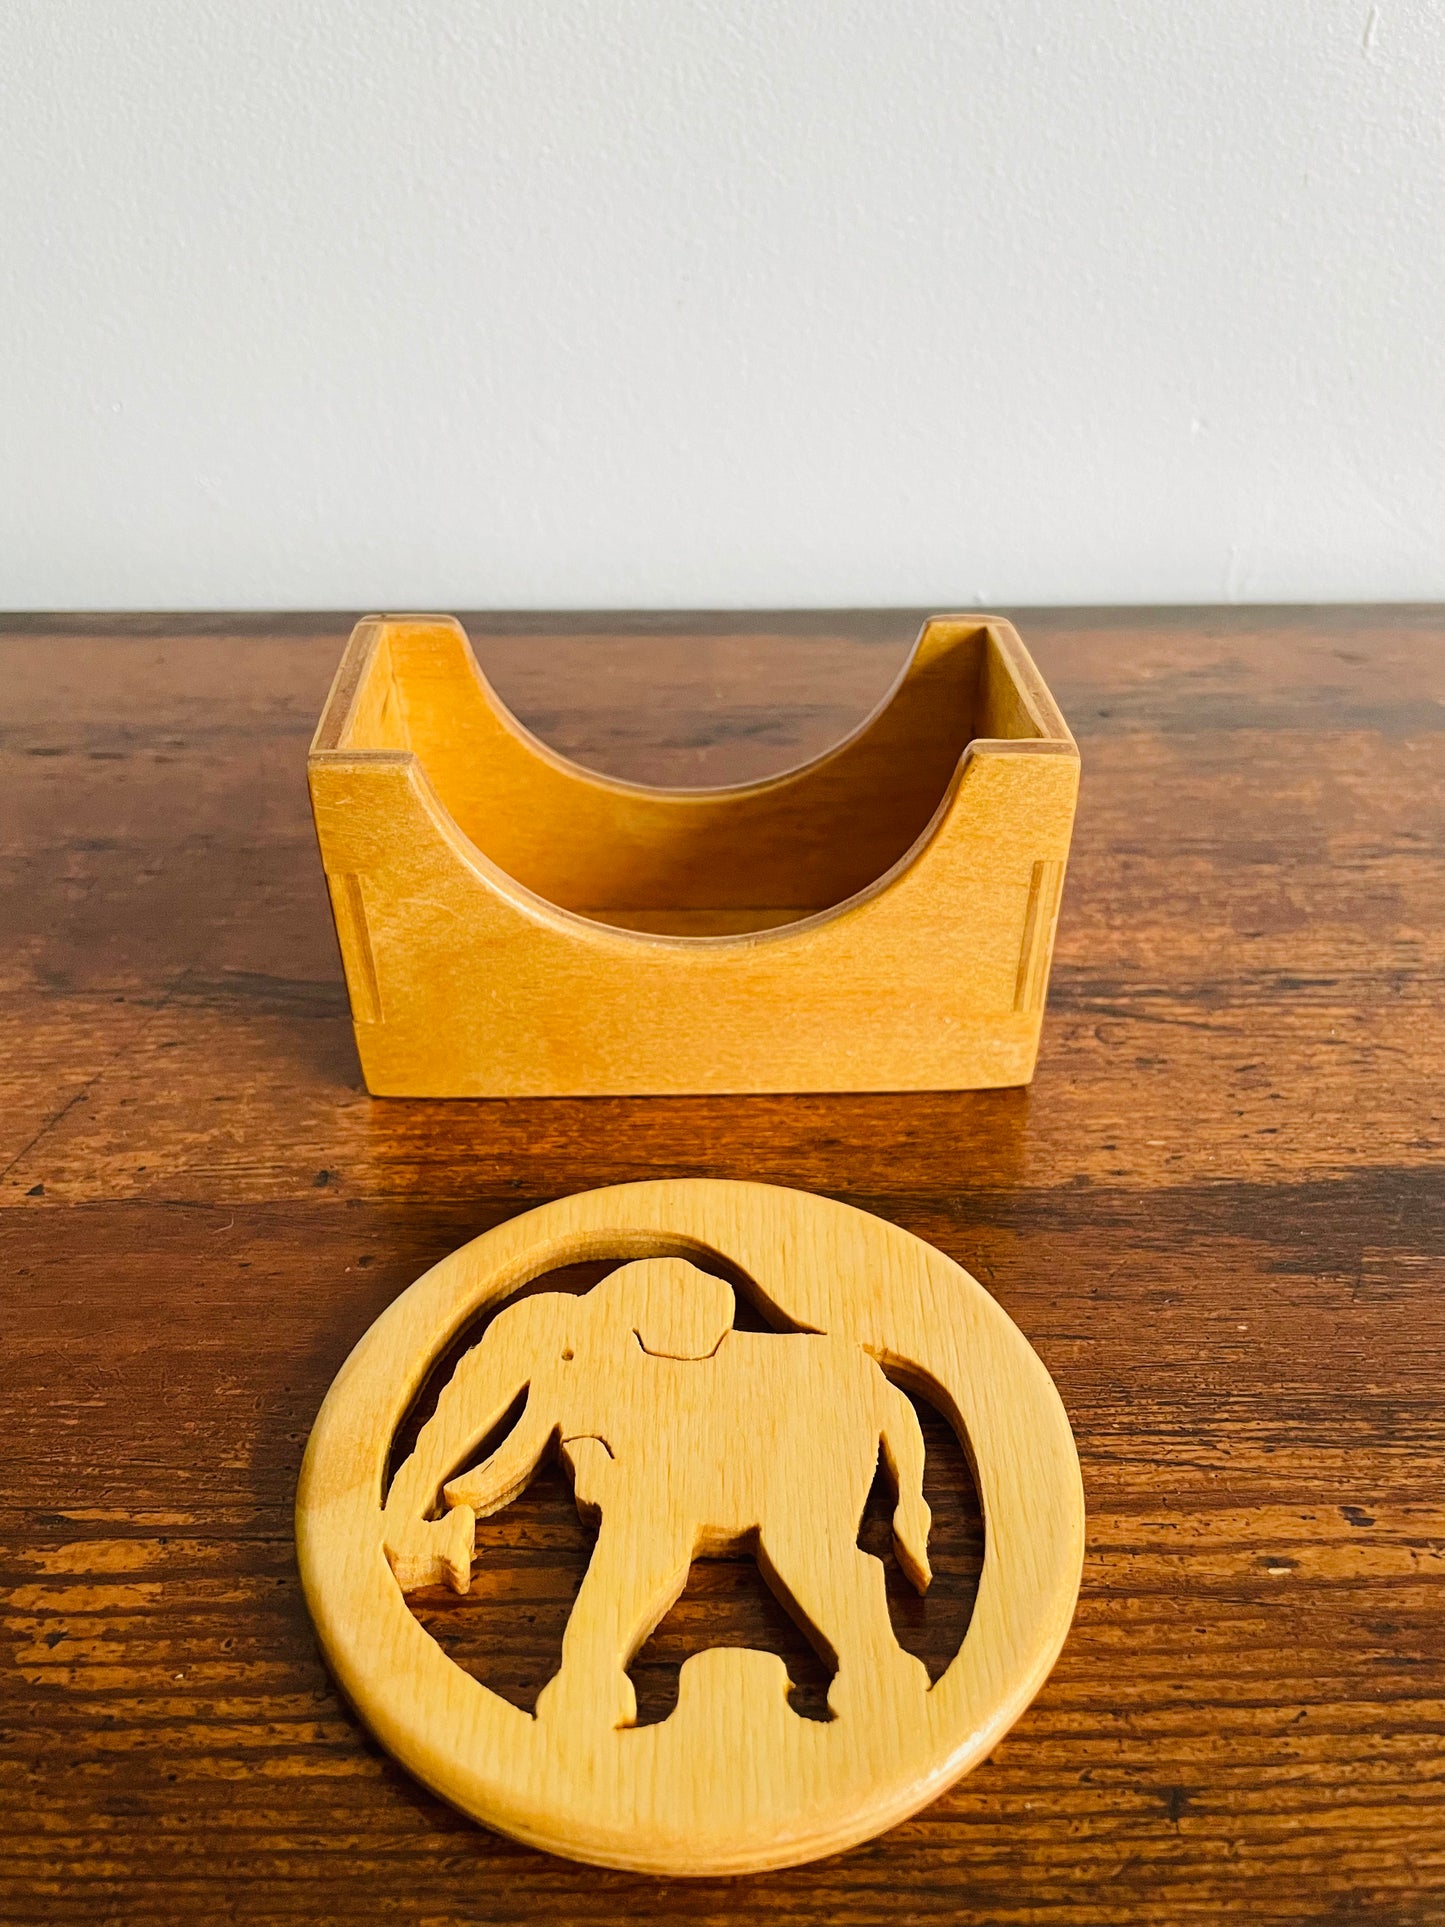 Safari Animals Wooden Coasters in Box - Set of 6